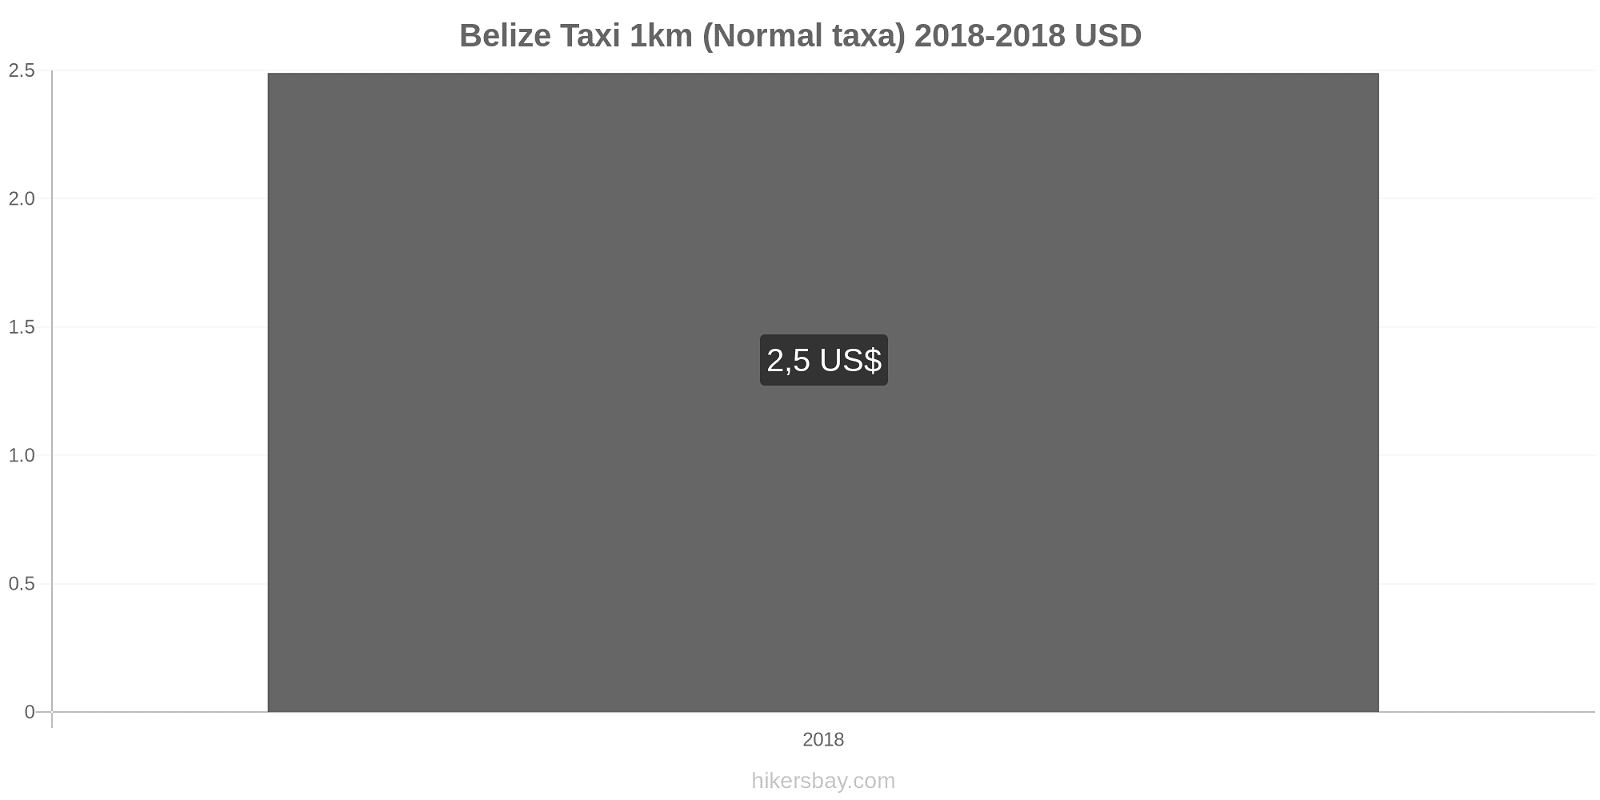 Belize prisändringar Taxi 1km (Normal taxa) hikersbay.com